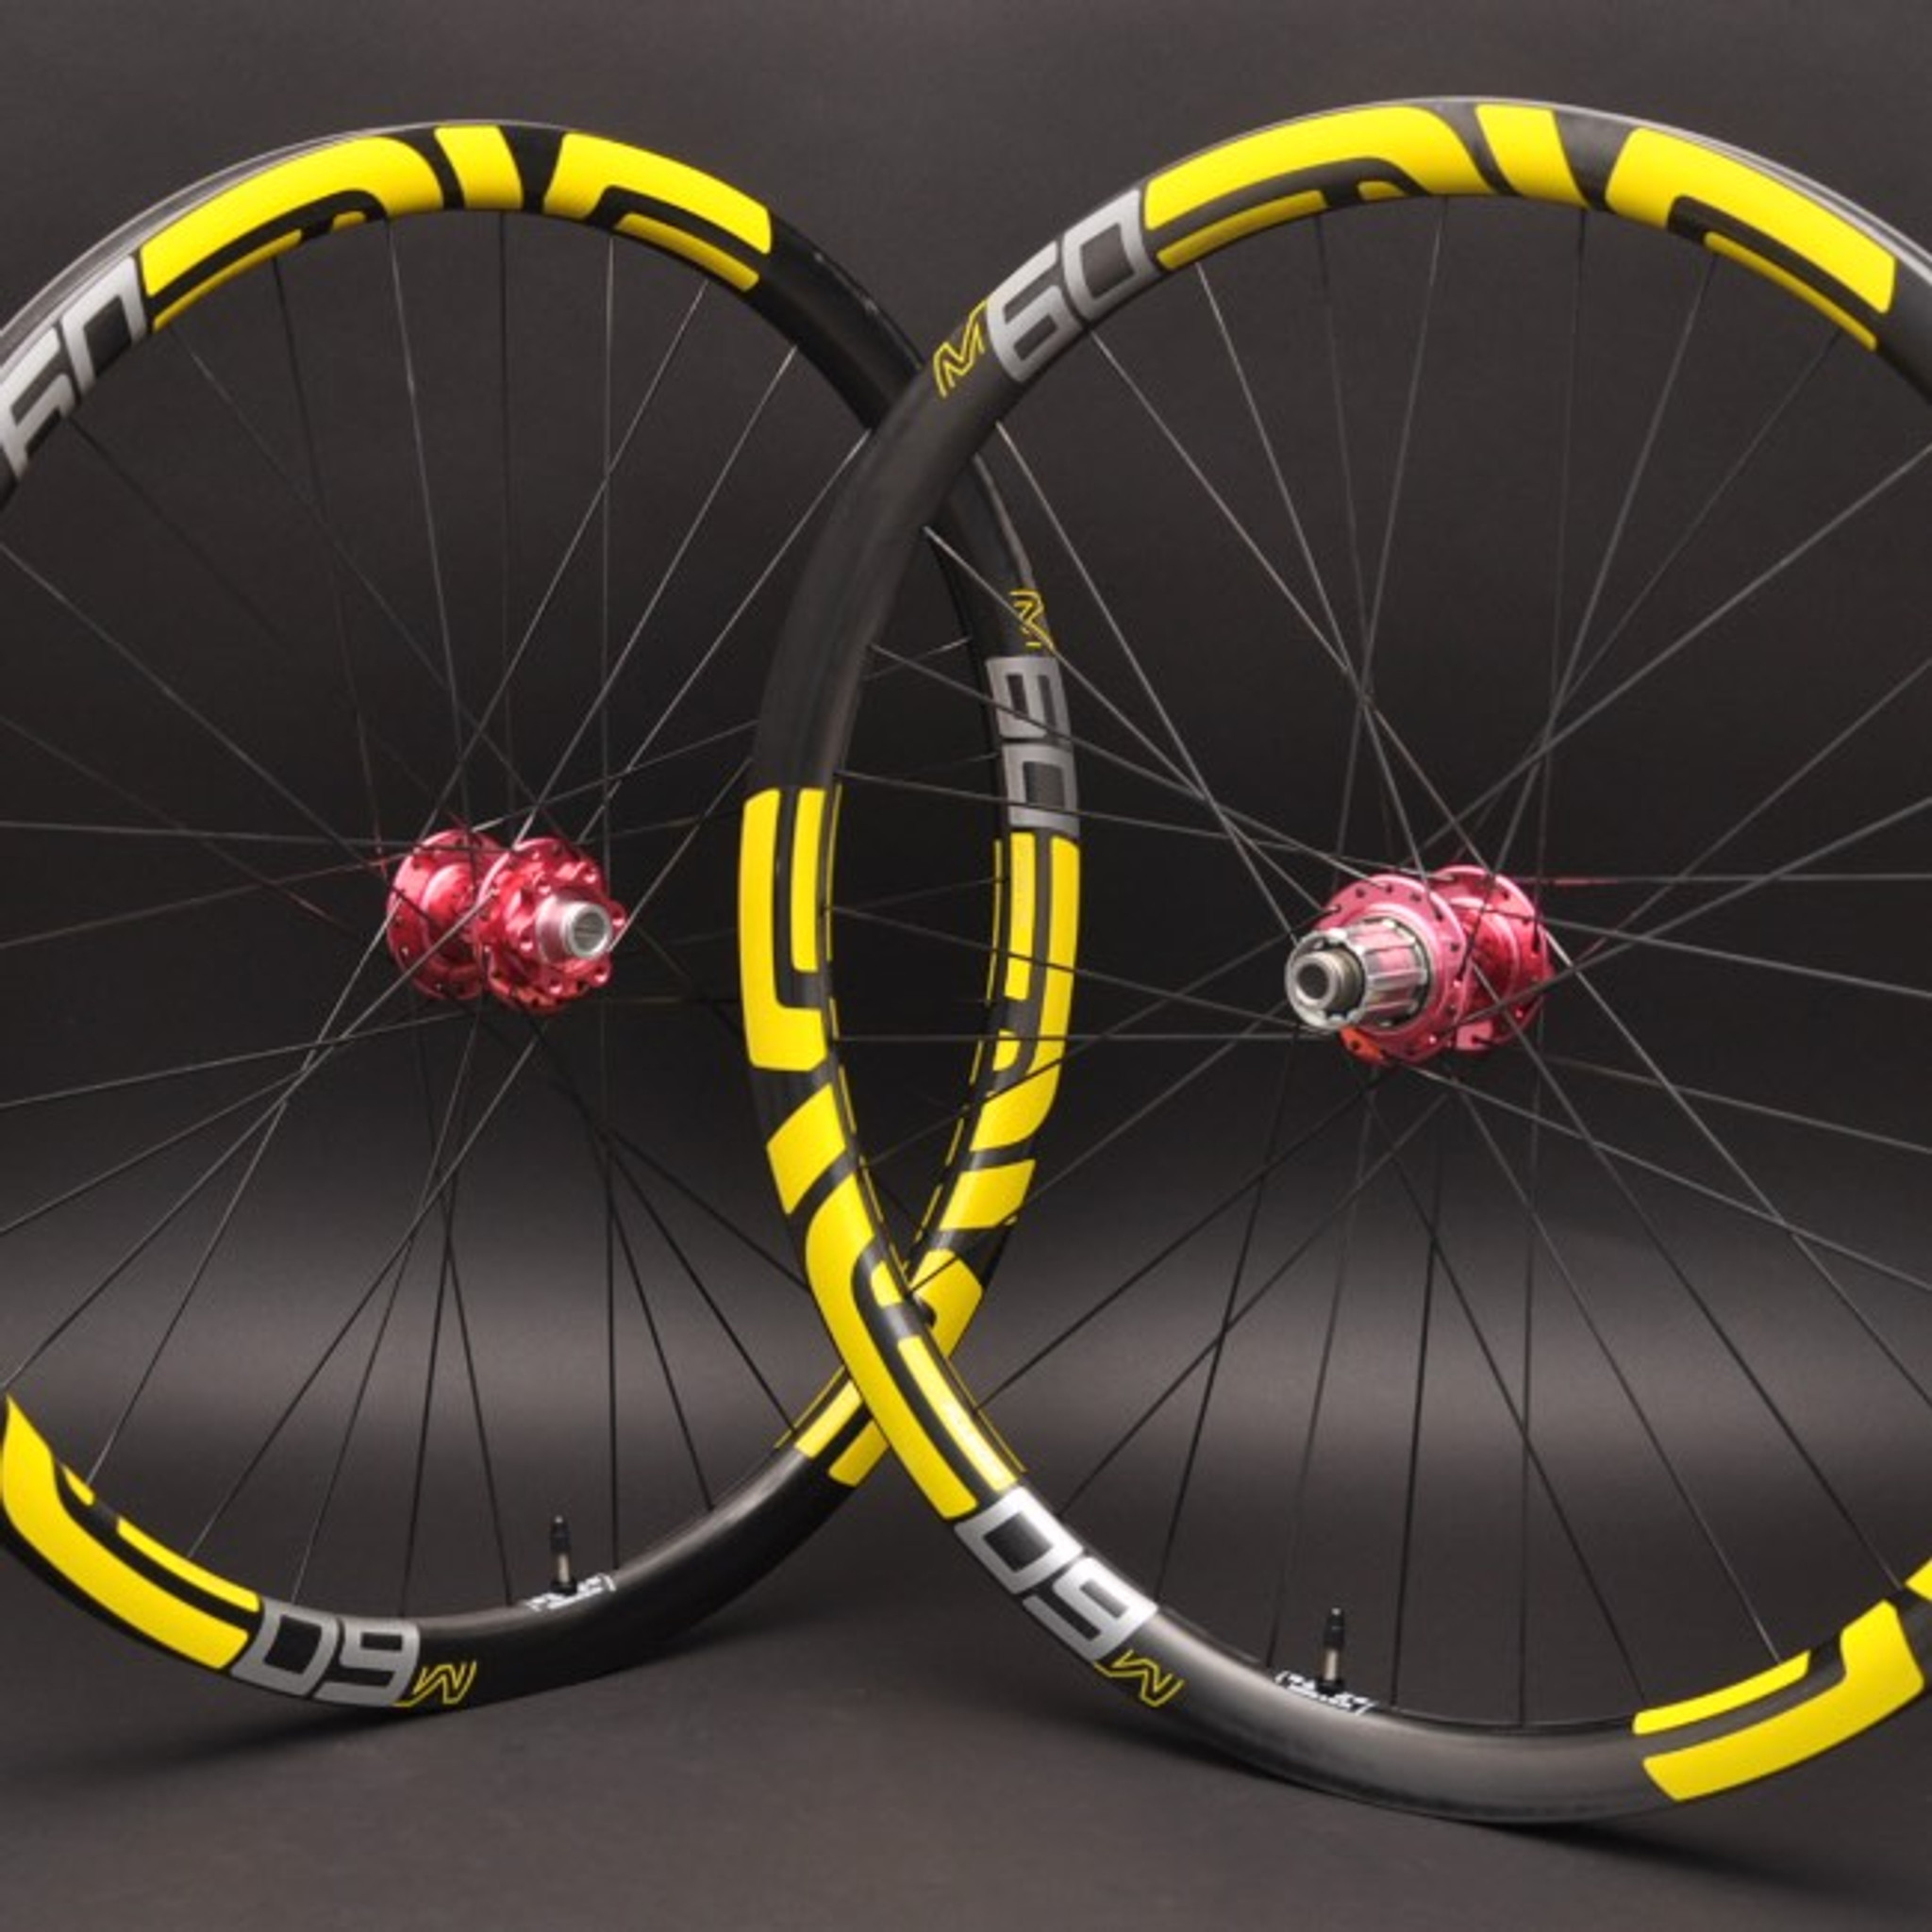 27.5 inch mountain bike wheels for sale